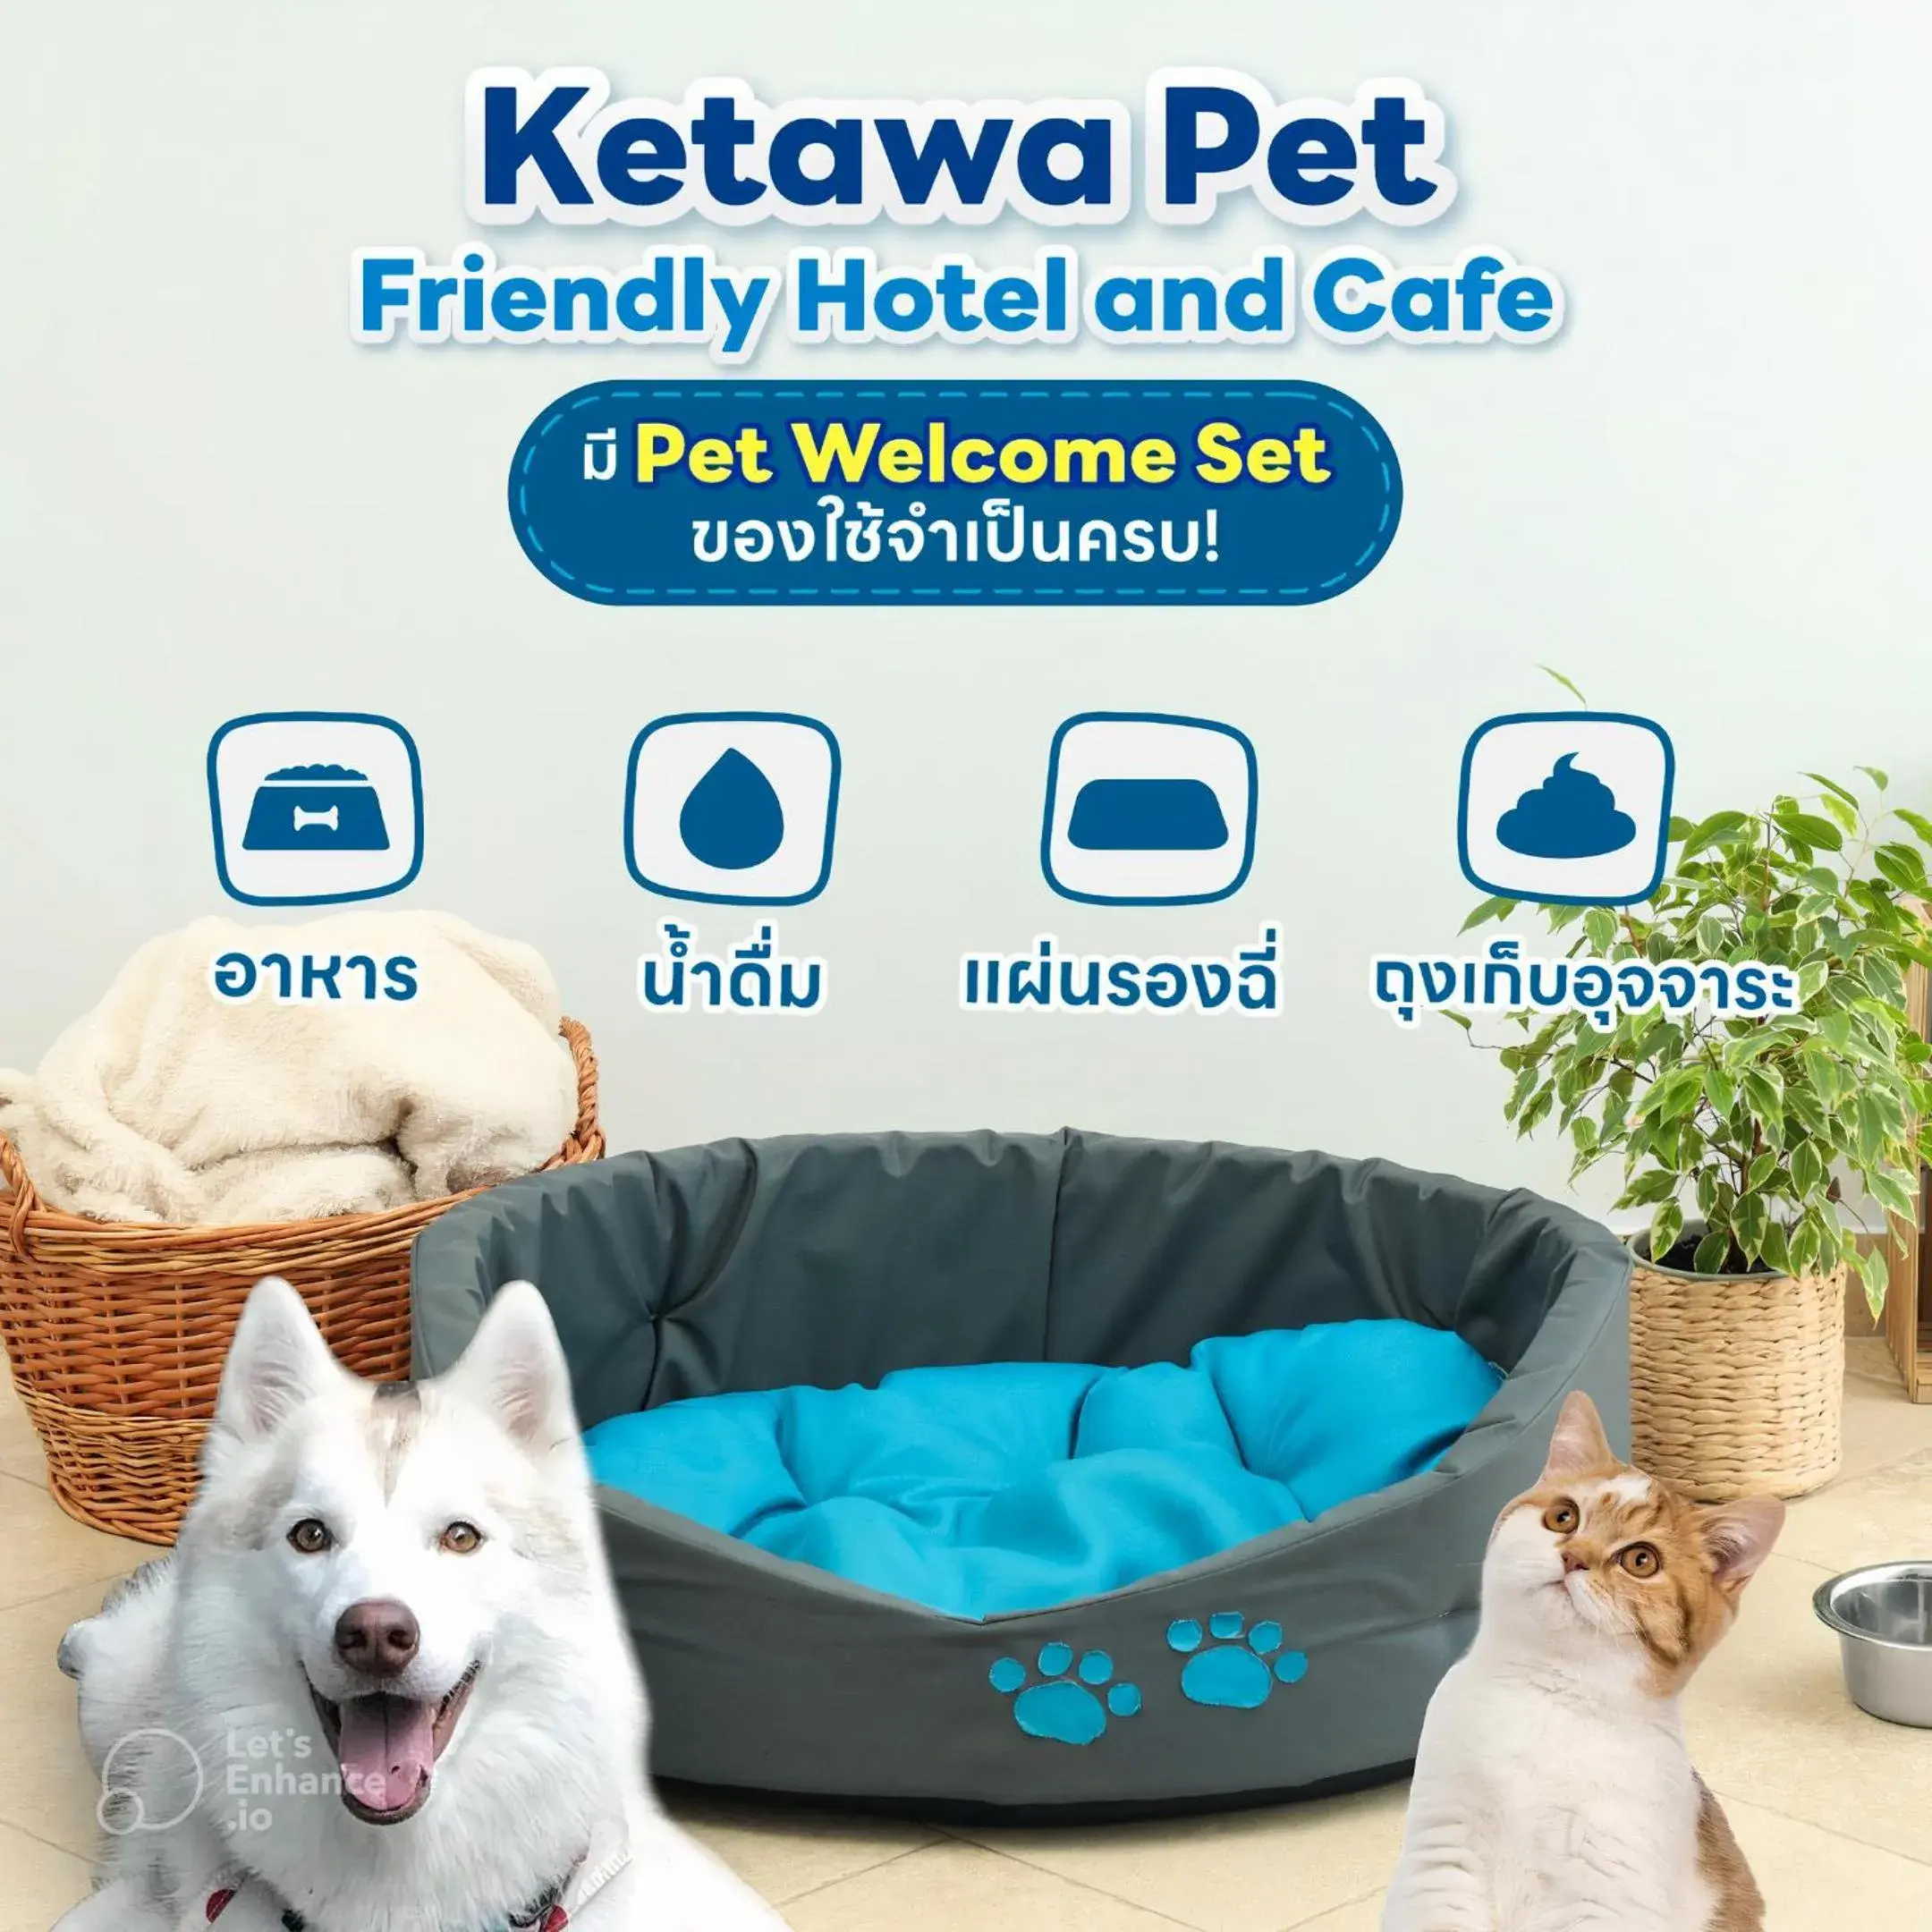 Pets in Ketawa Pet Friendly Hotel